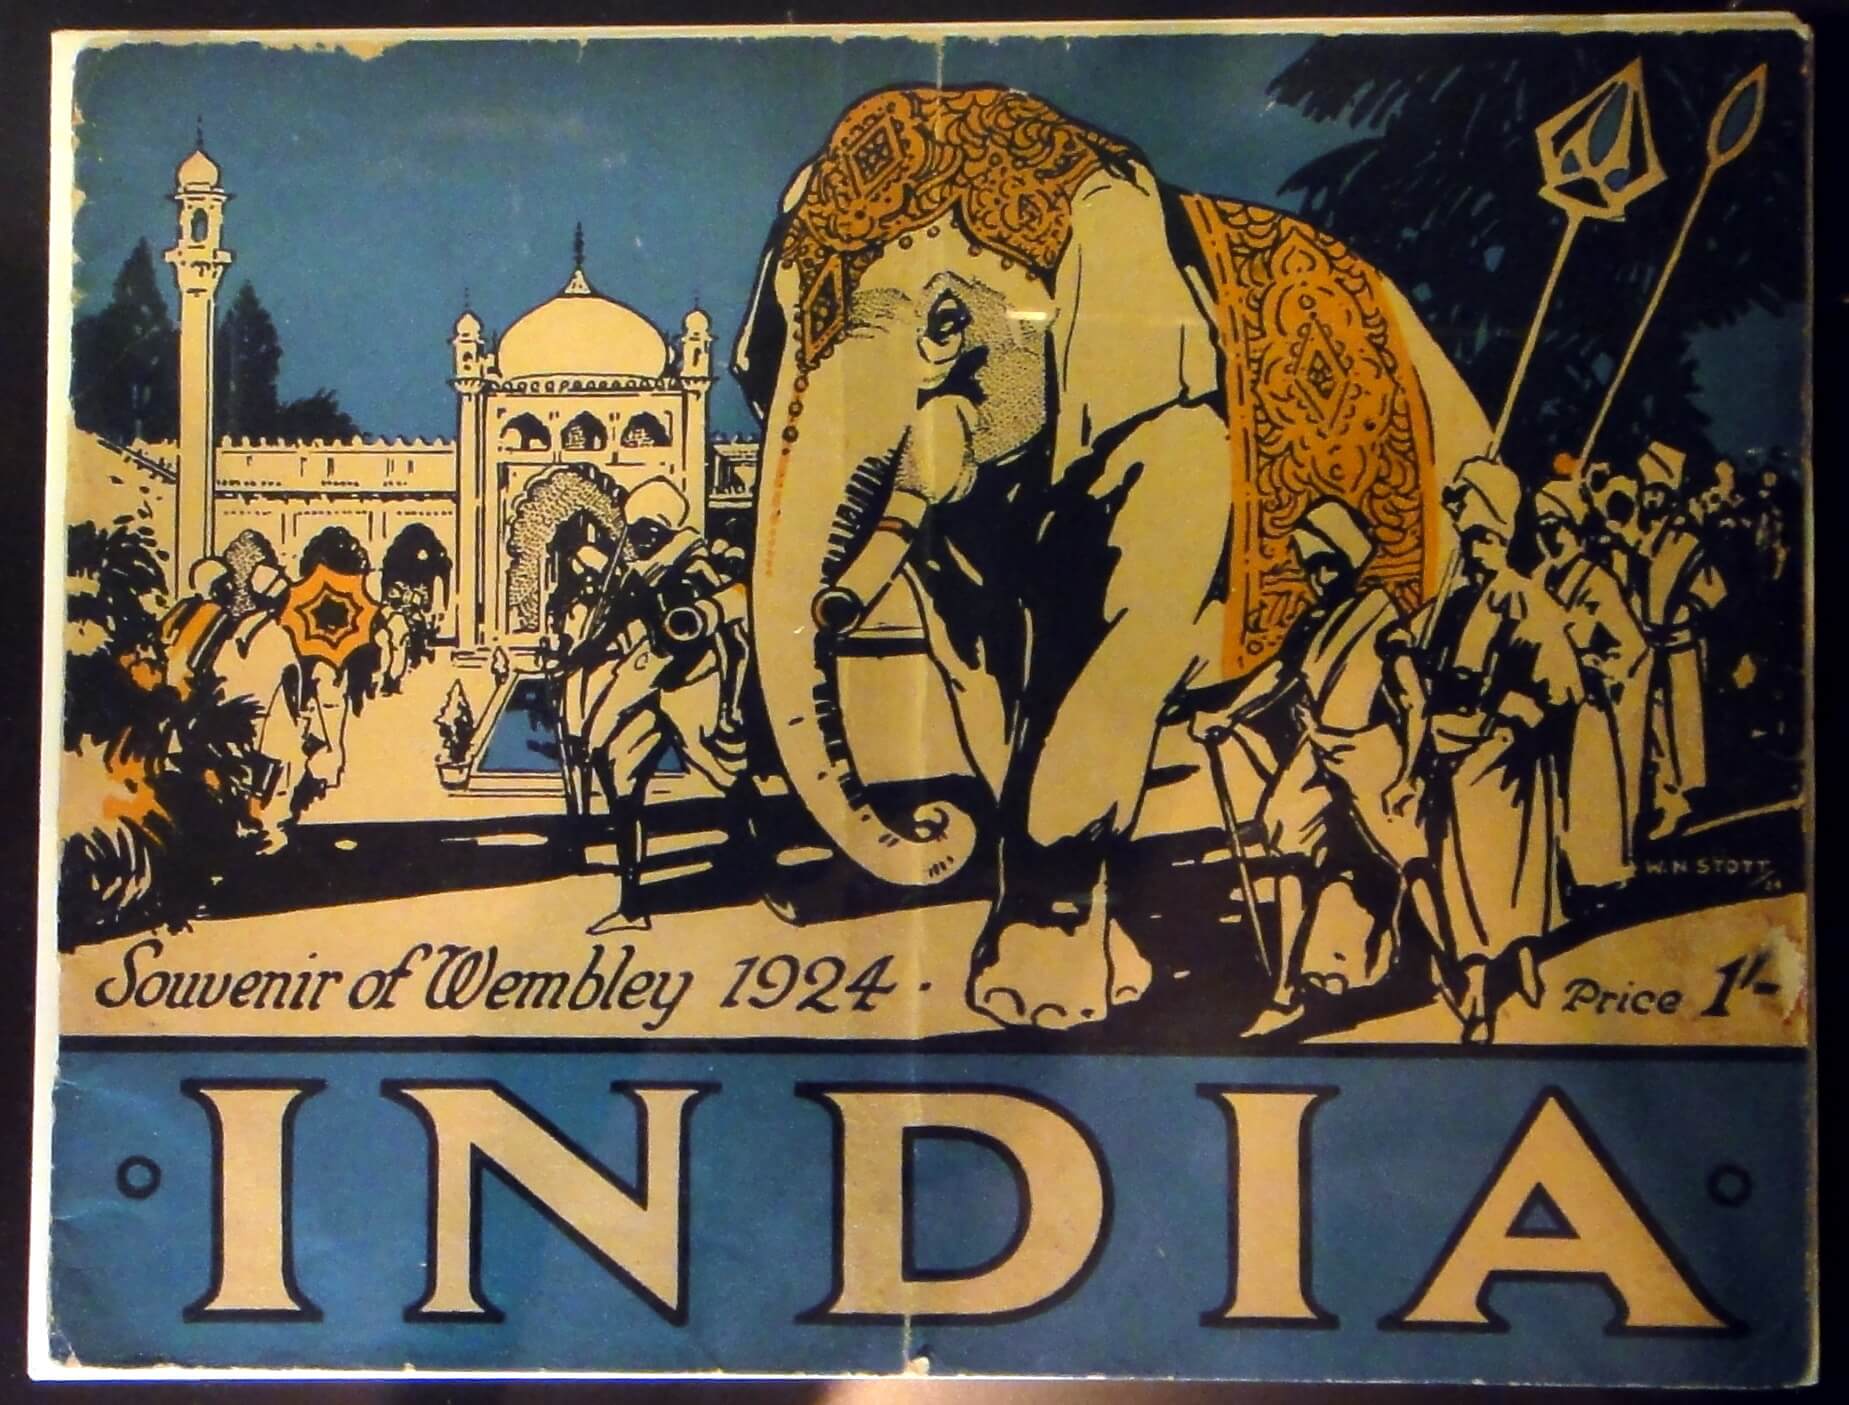 deJong-foto3-India-Souvenir of Wembley 1924 (British Empire Exhibition)-Matt Kleffer-Flickr